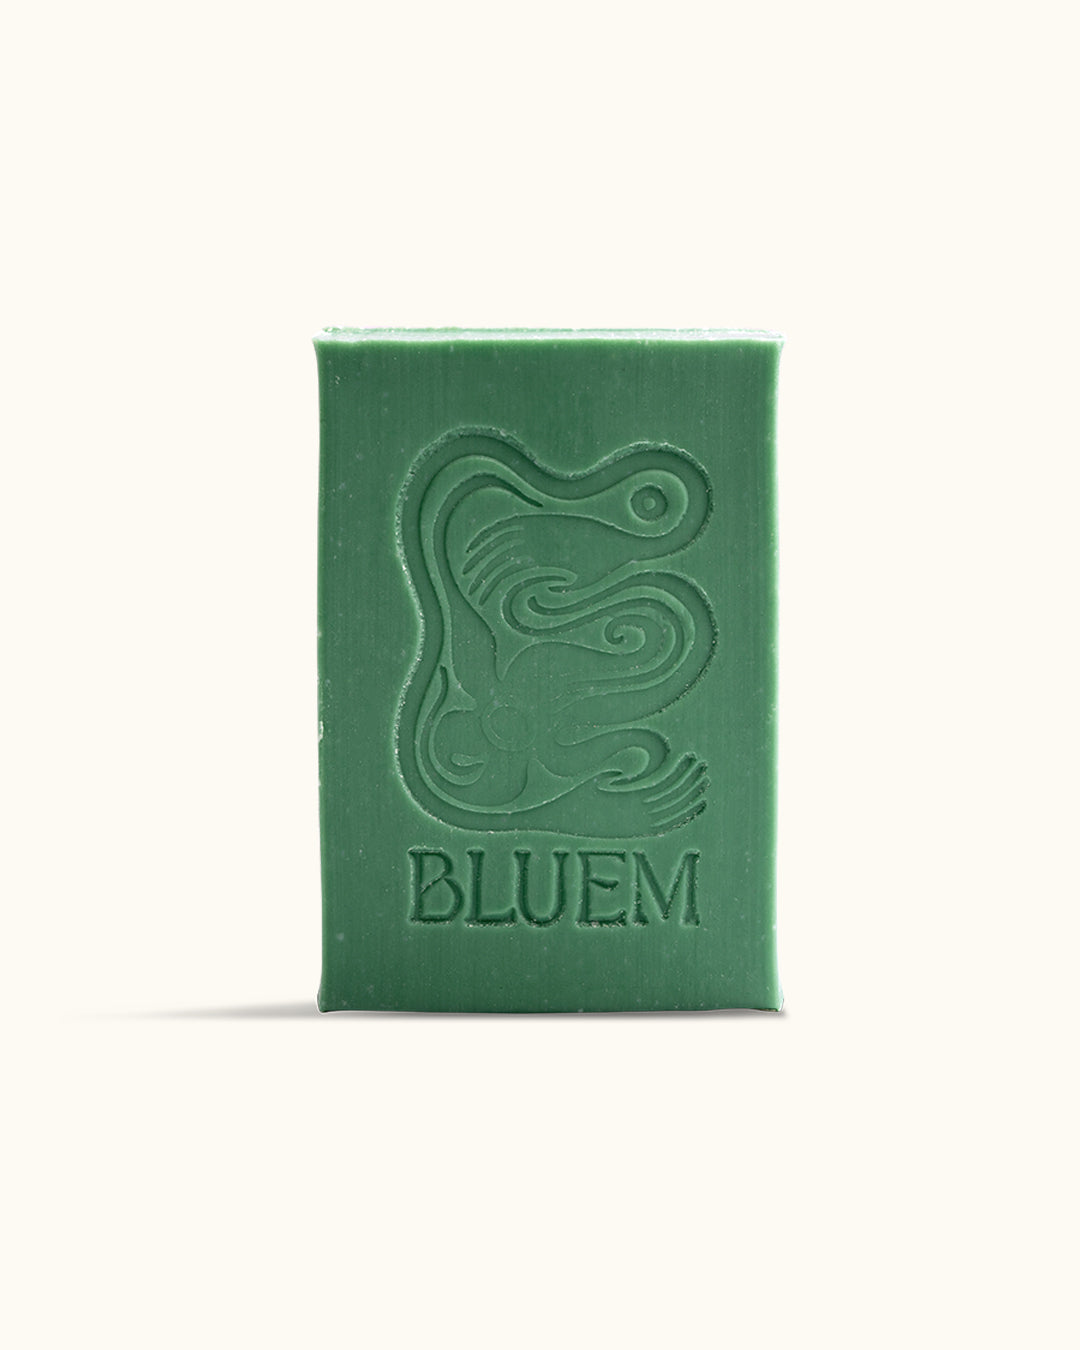 BLUEM Green Tea Soul Soap Au Naturel